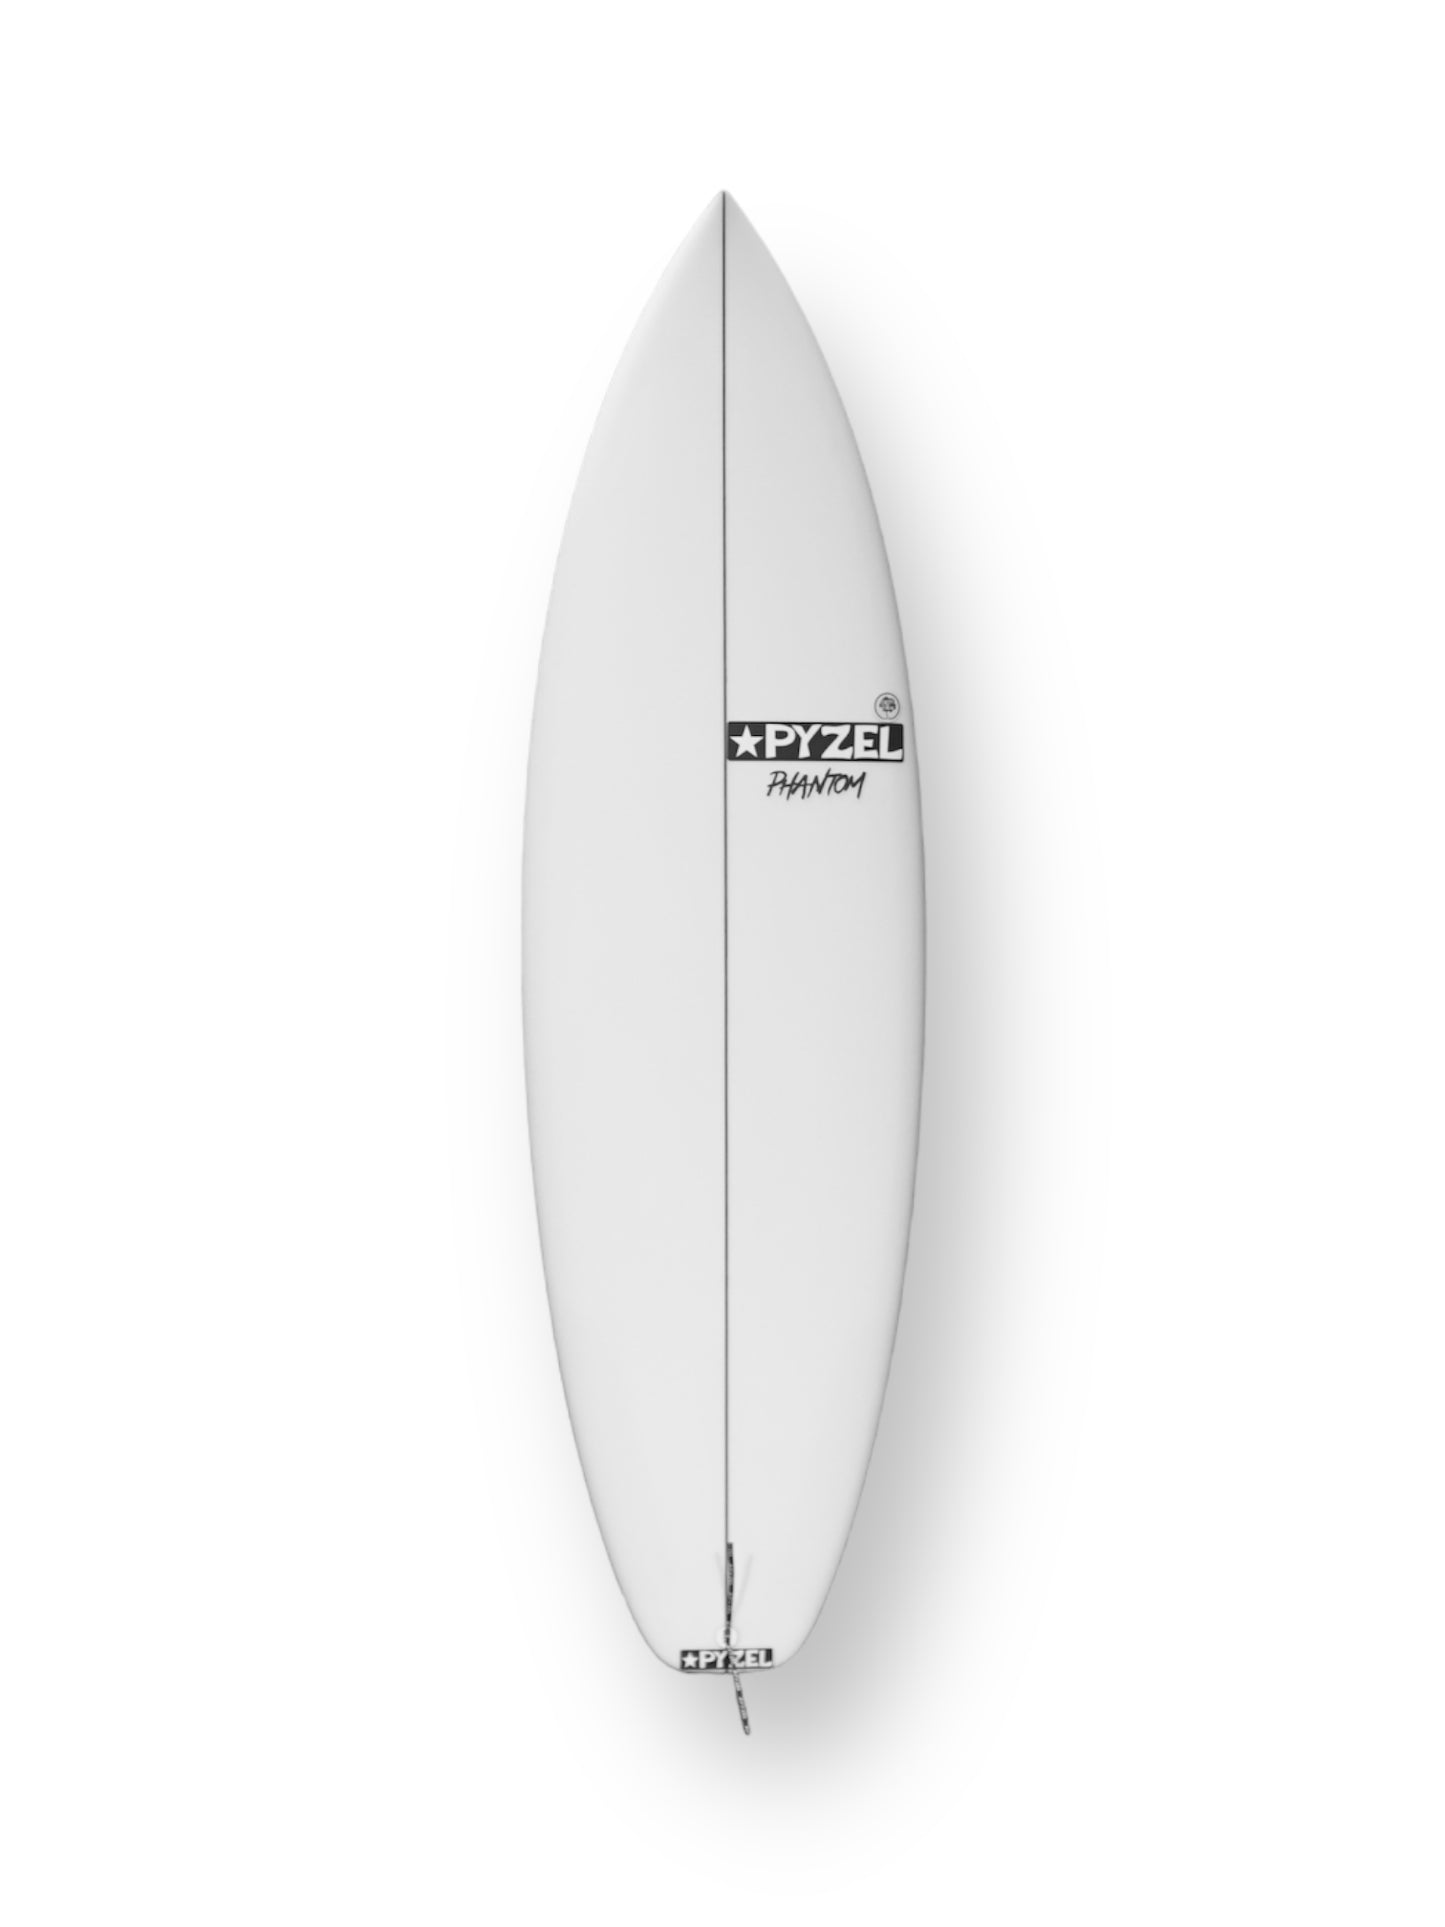 PYZEL PHANTOM 5'9" SURFBOARD